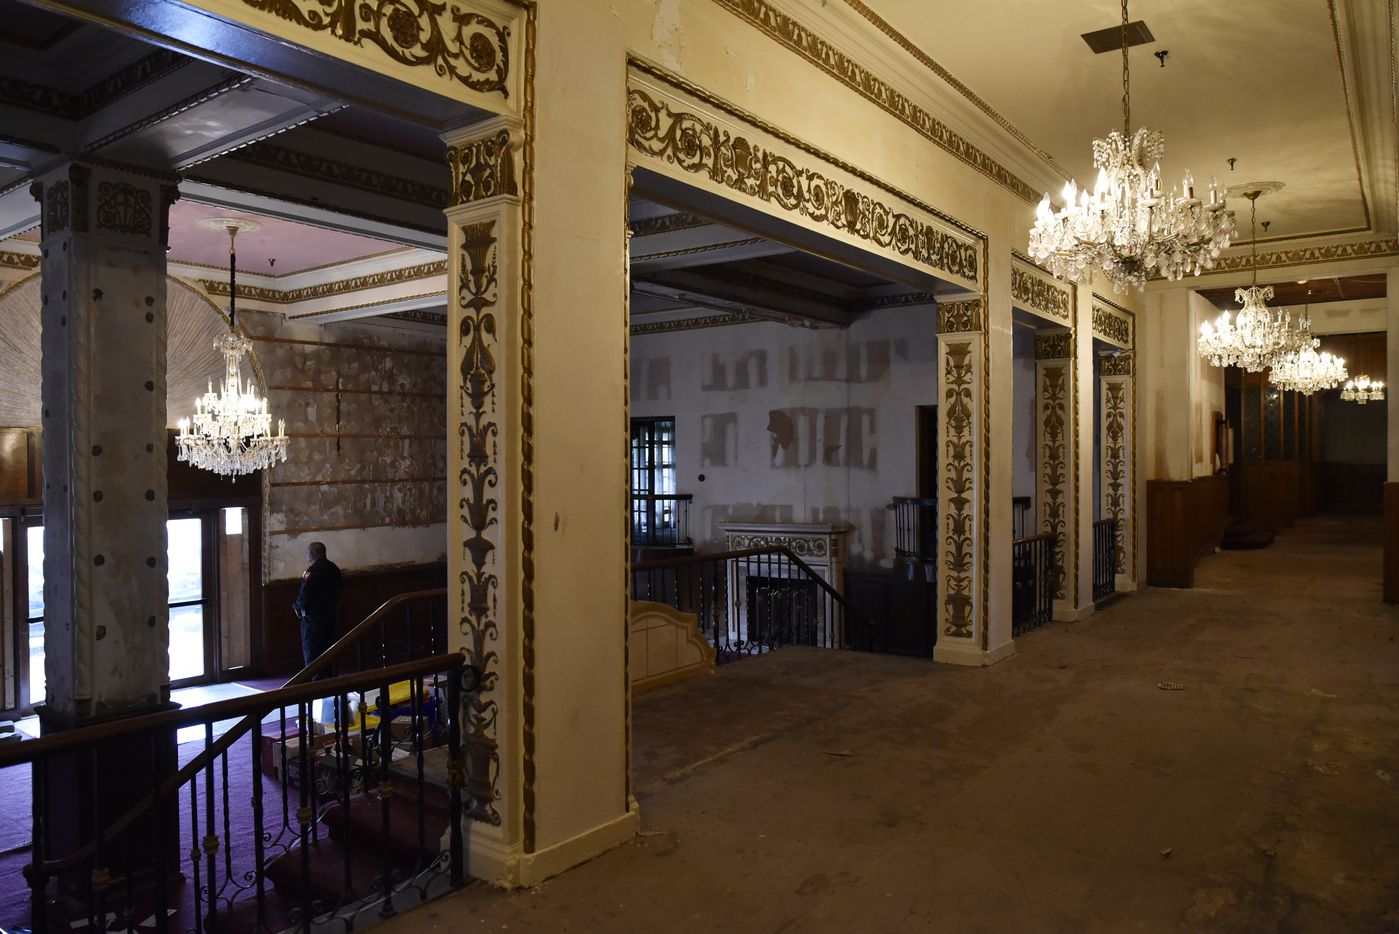 The main lobby inside the historic Ambassador Hotel seen in January 2019.